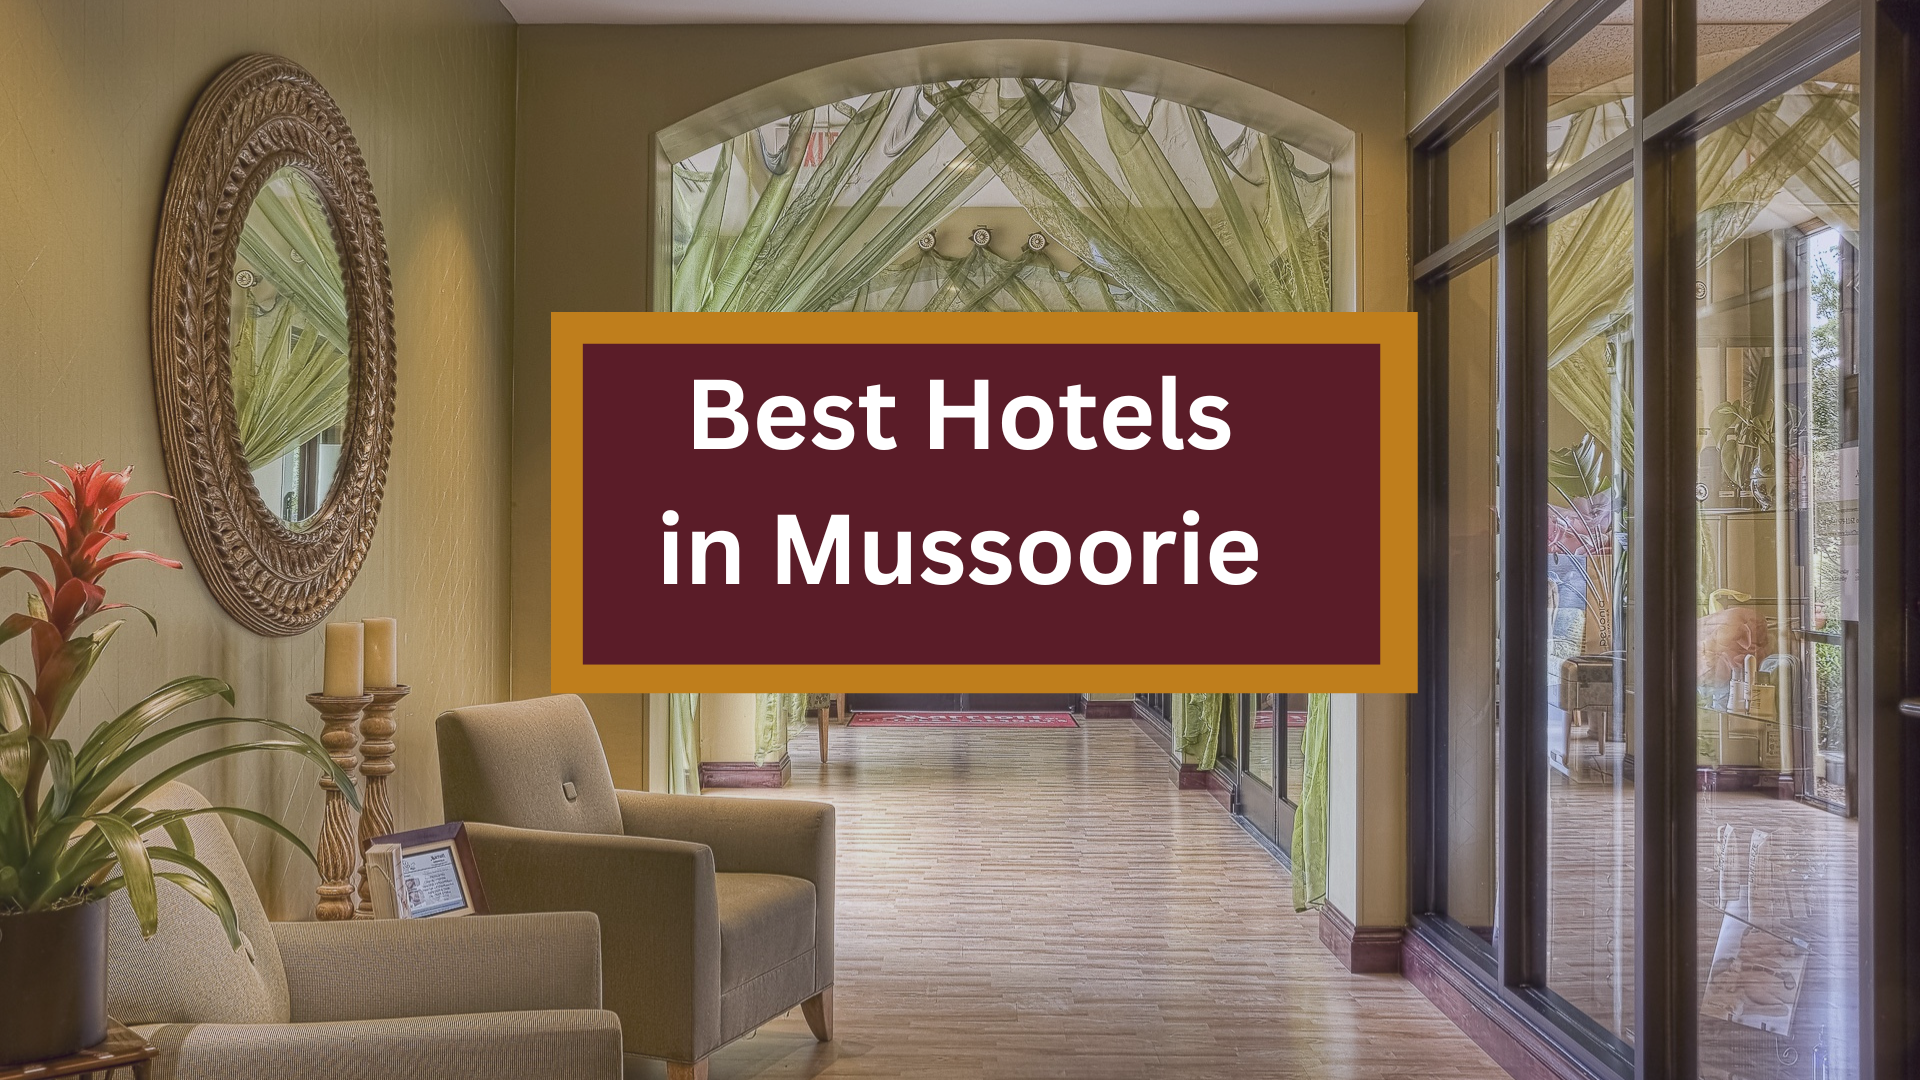 Best hotels in mussoorie